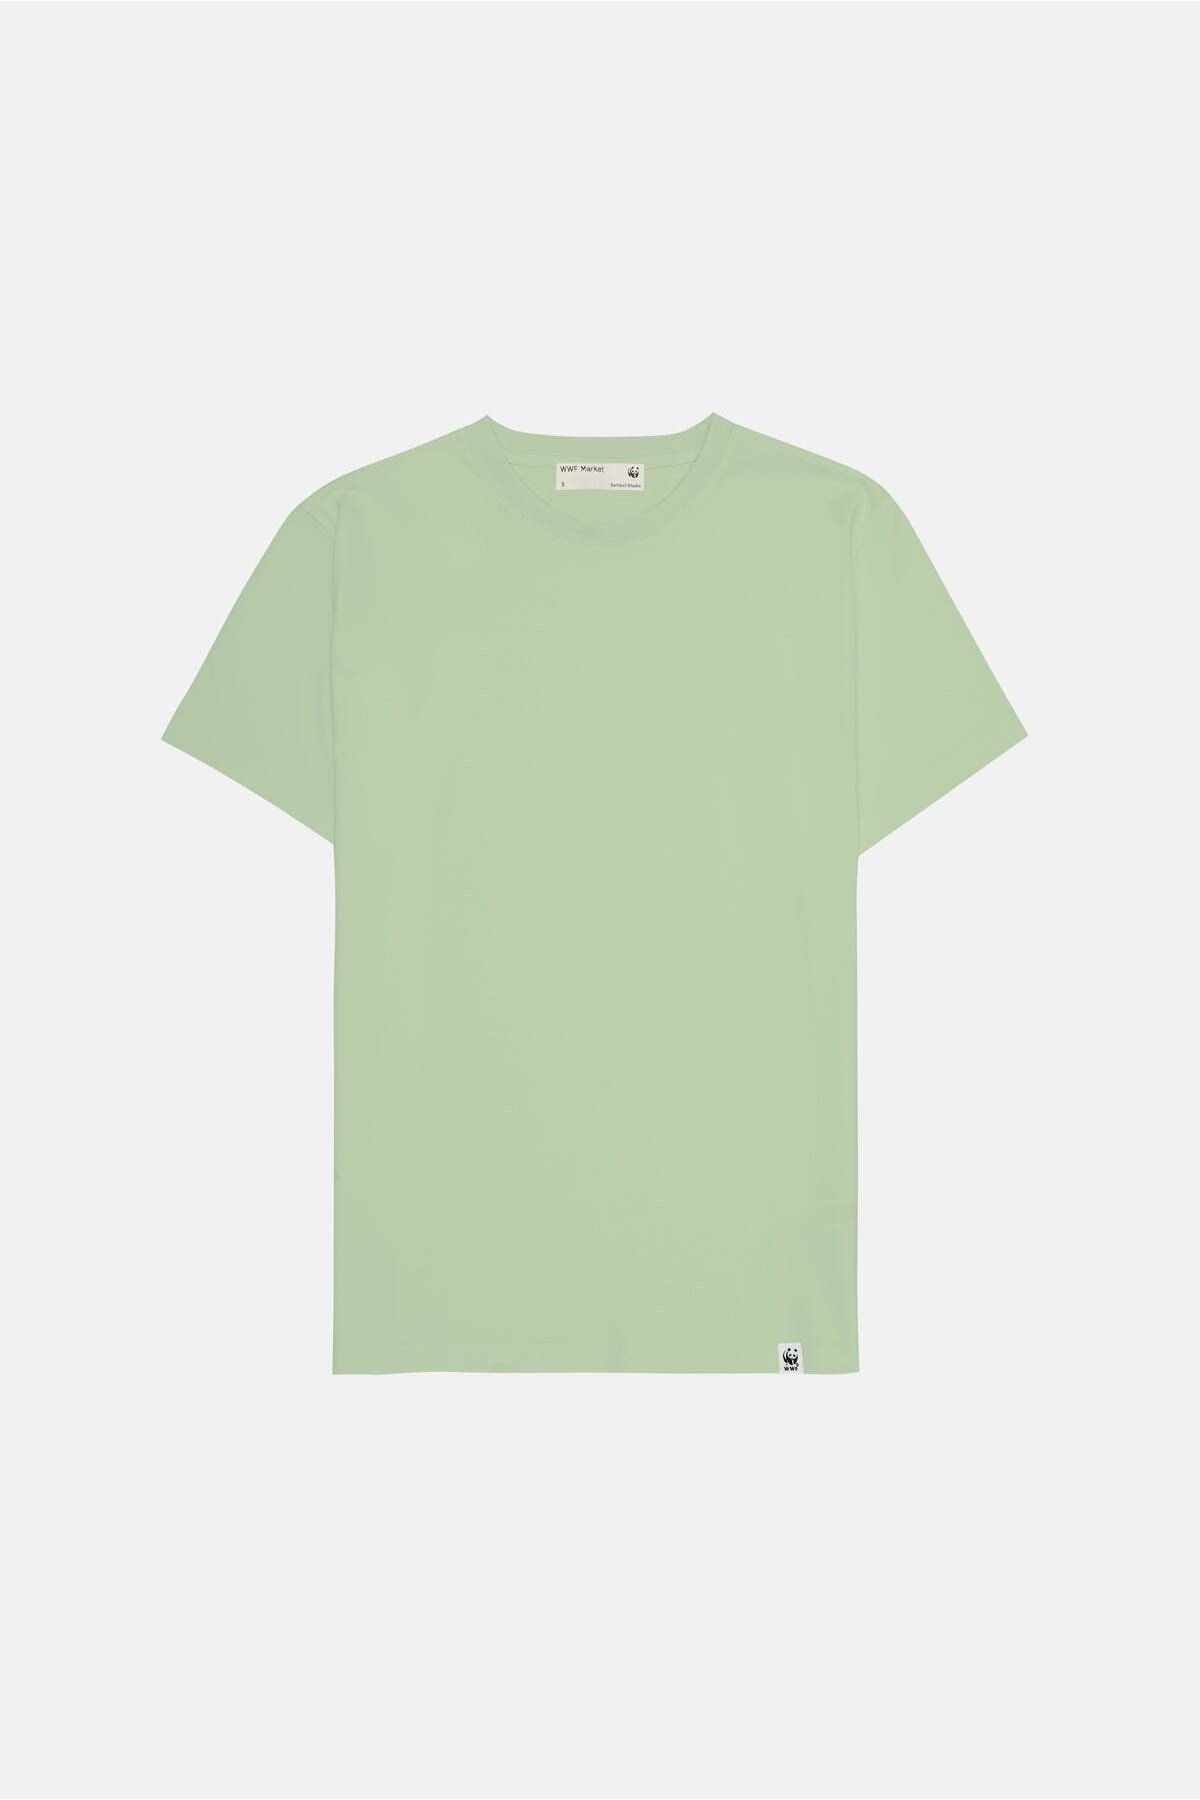 WWF Market Basic Kadın Light-weight T-shirt - Açık Yeşil